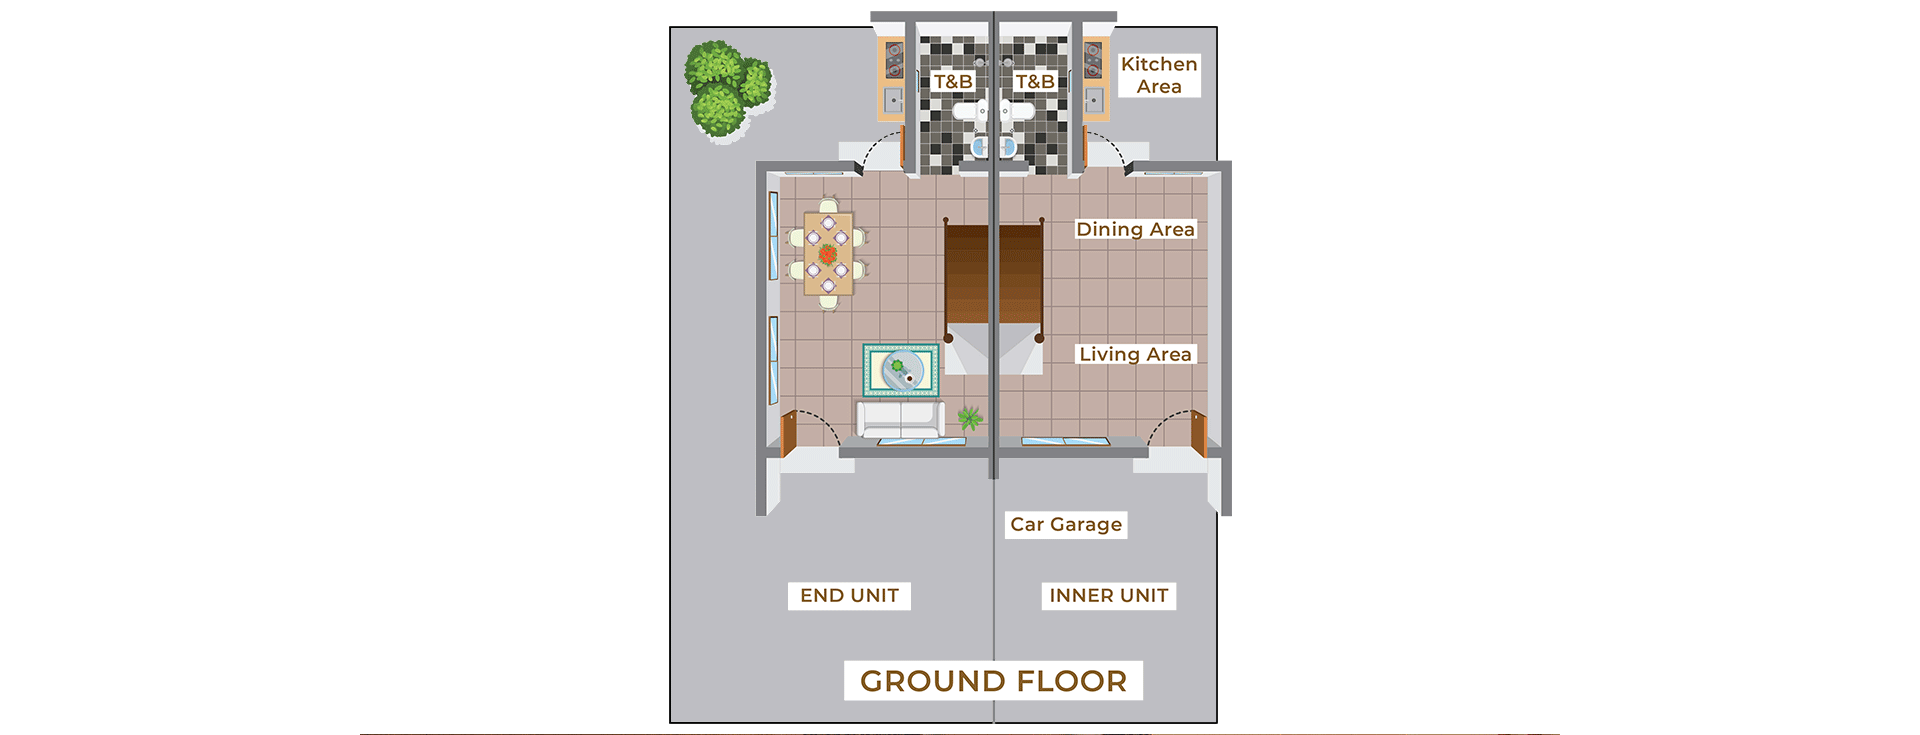 SHPY_Aliyah Ground Floor Plan